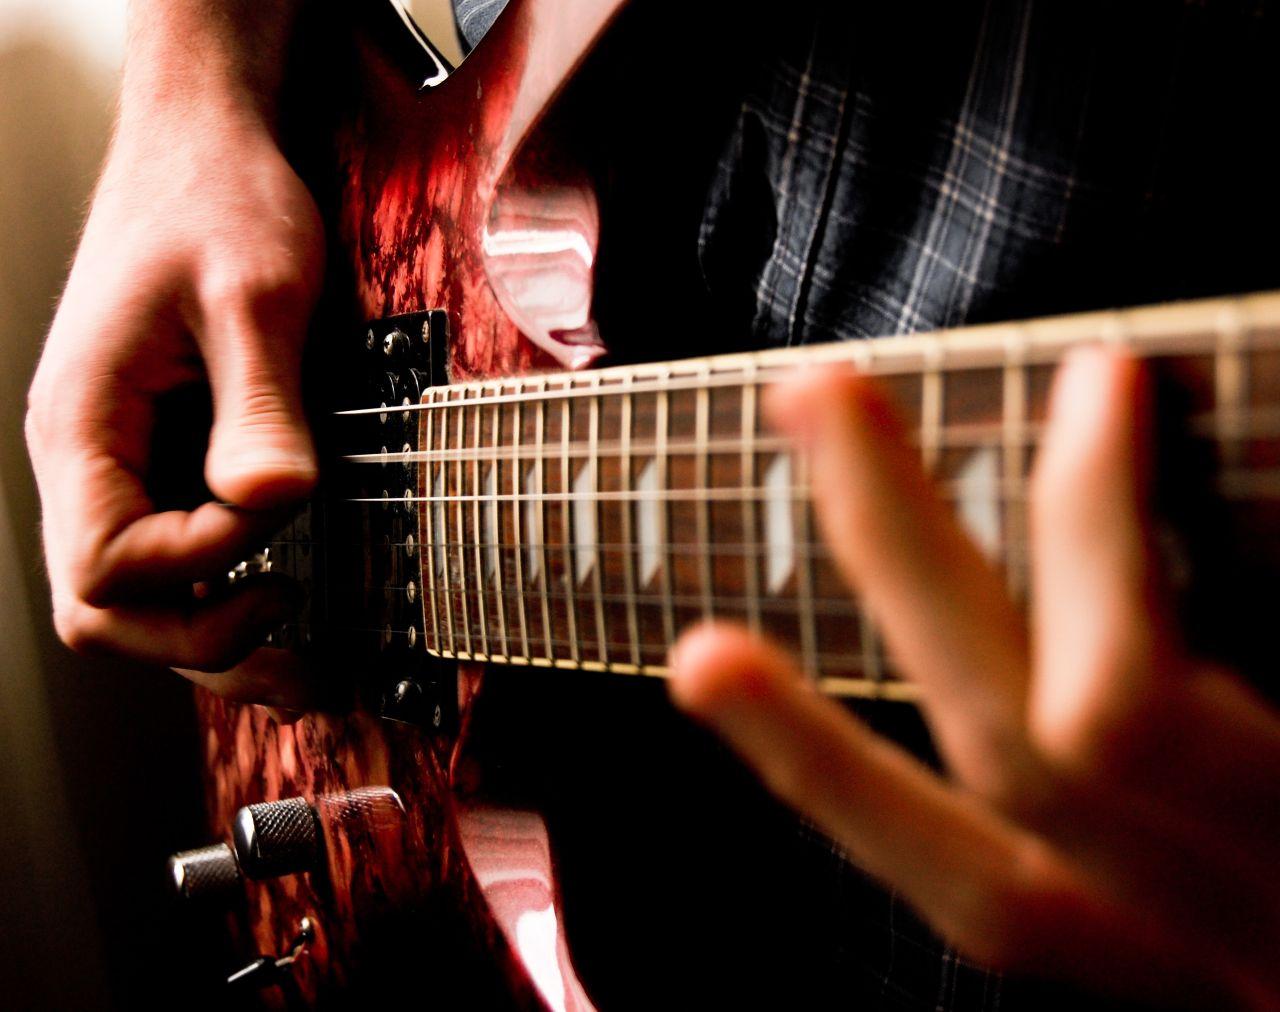 Игра на гитаре: записаться на занятия в Westendschool